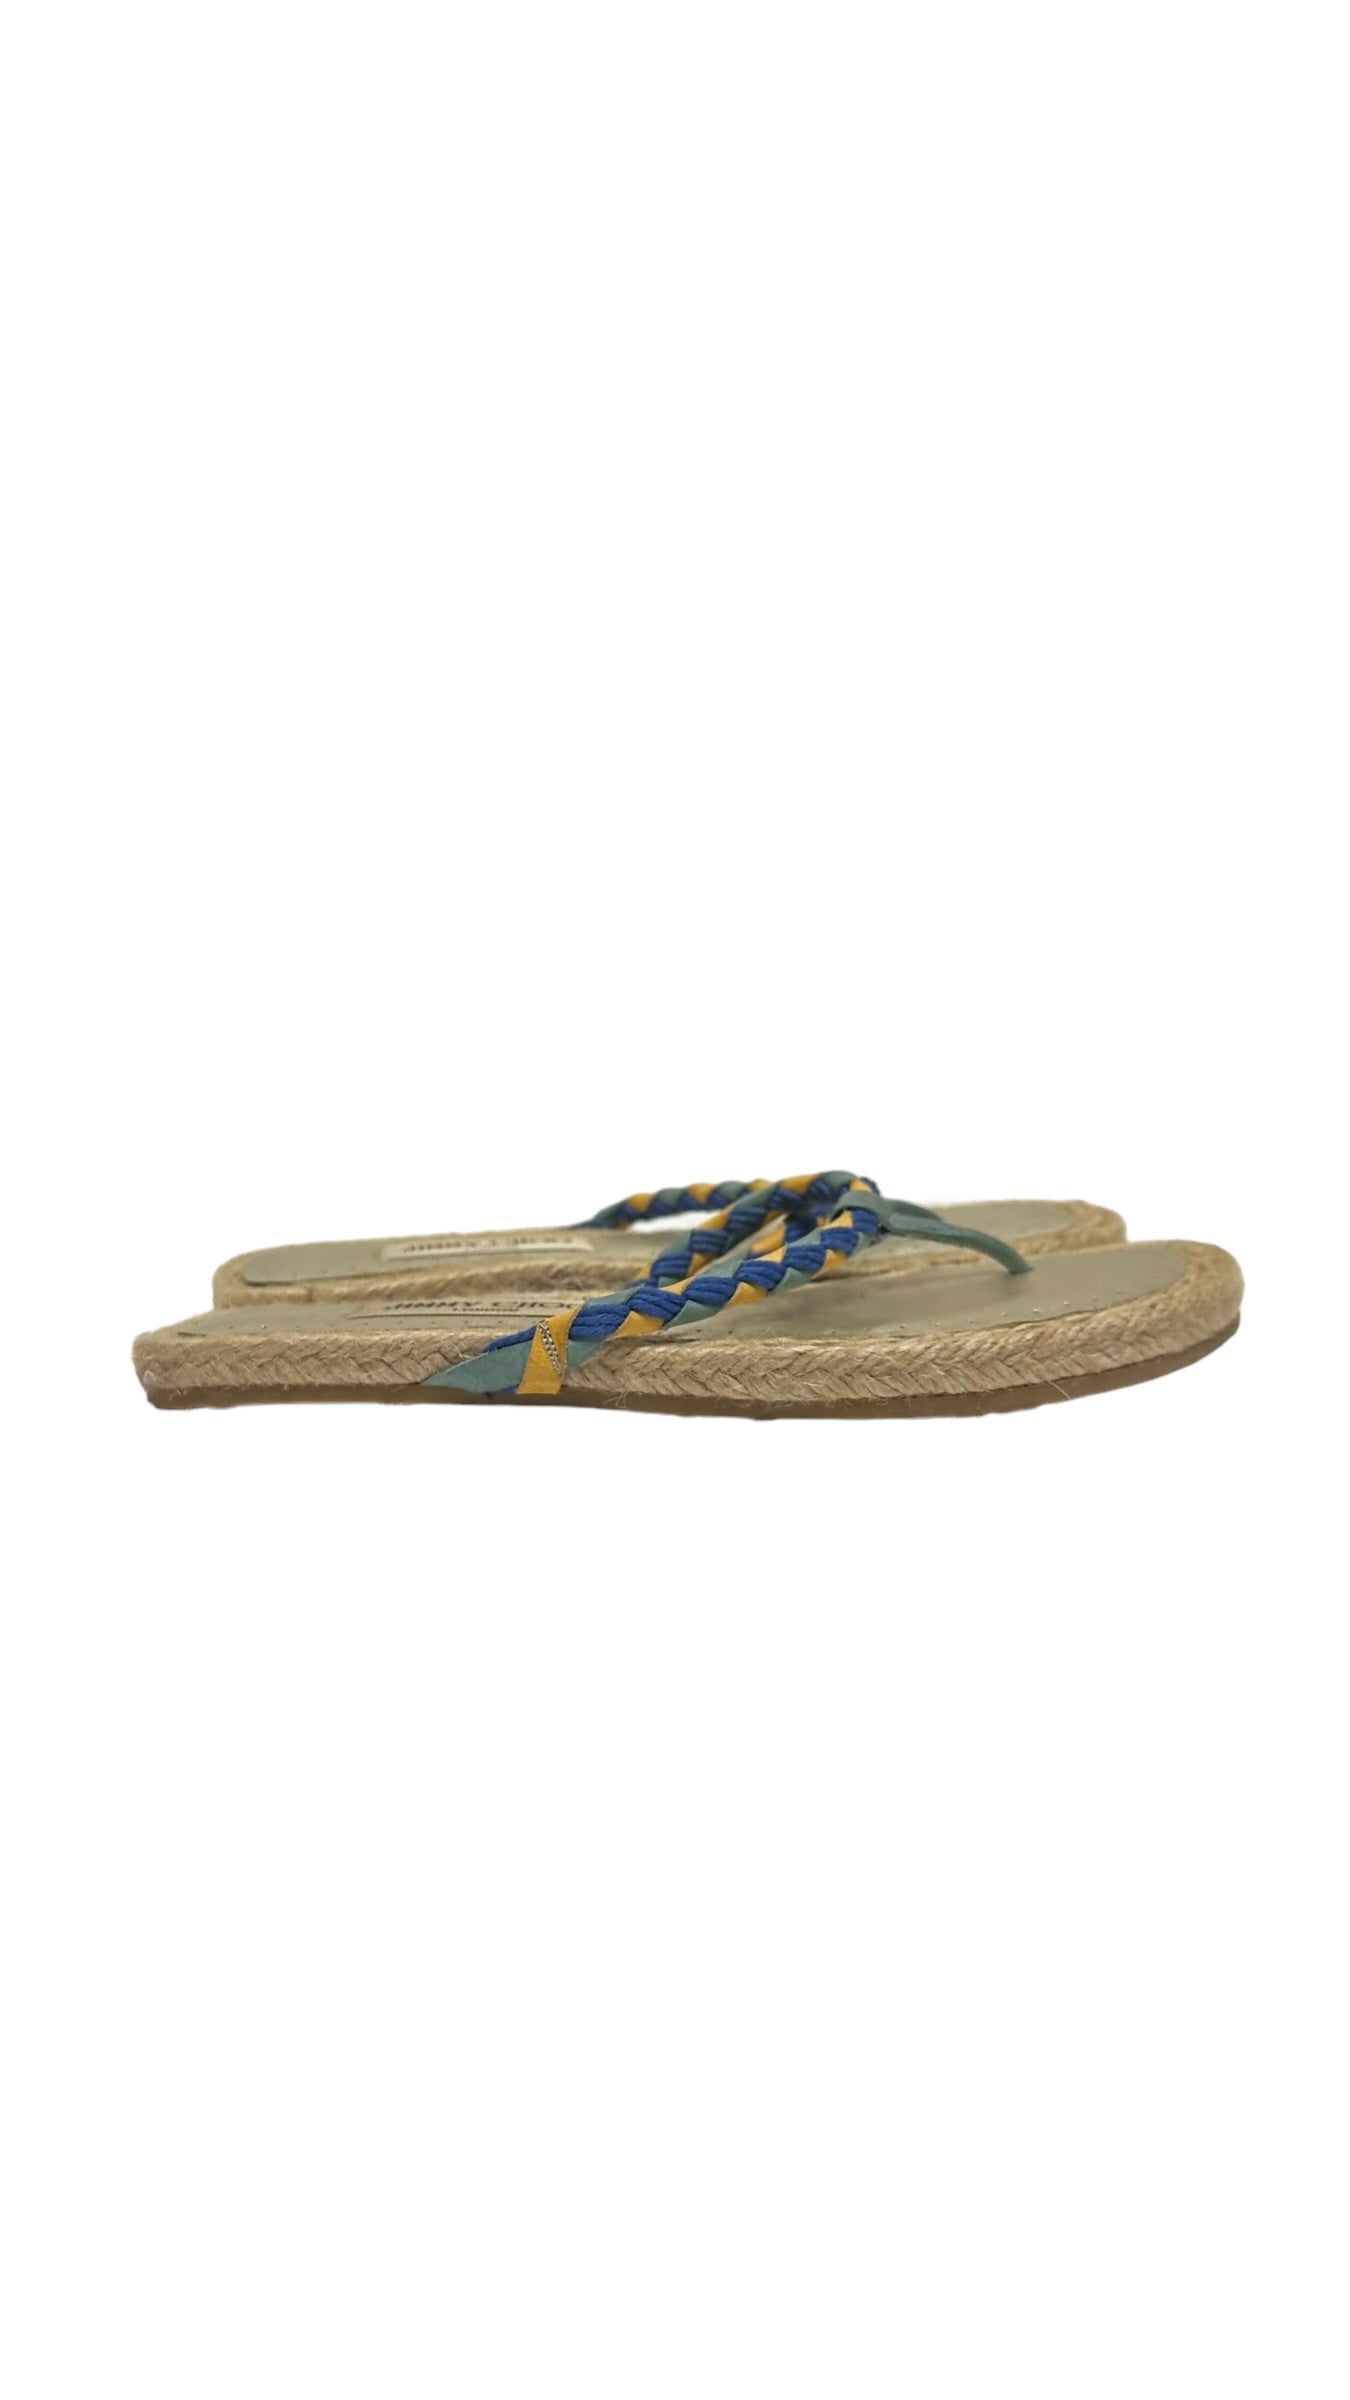 Blue & Green Sandals Flip Flops Jimmy Choo, Size 6